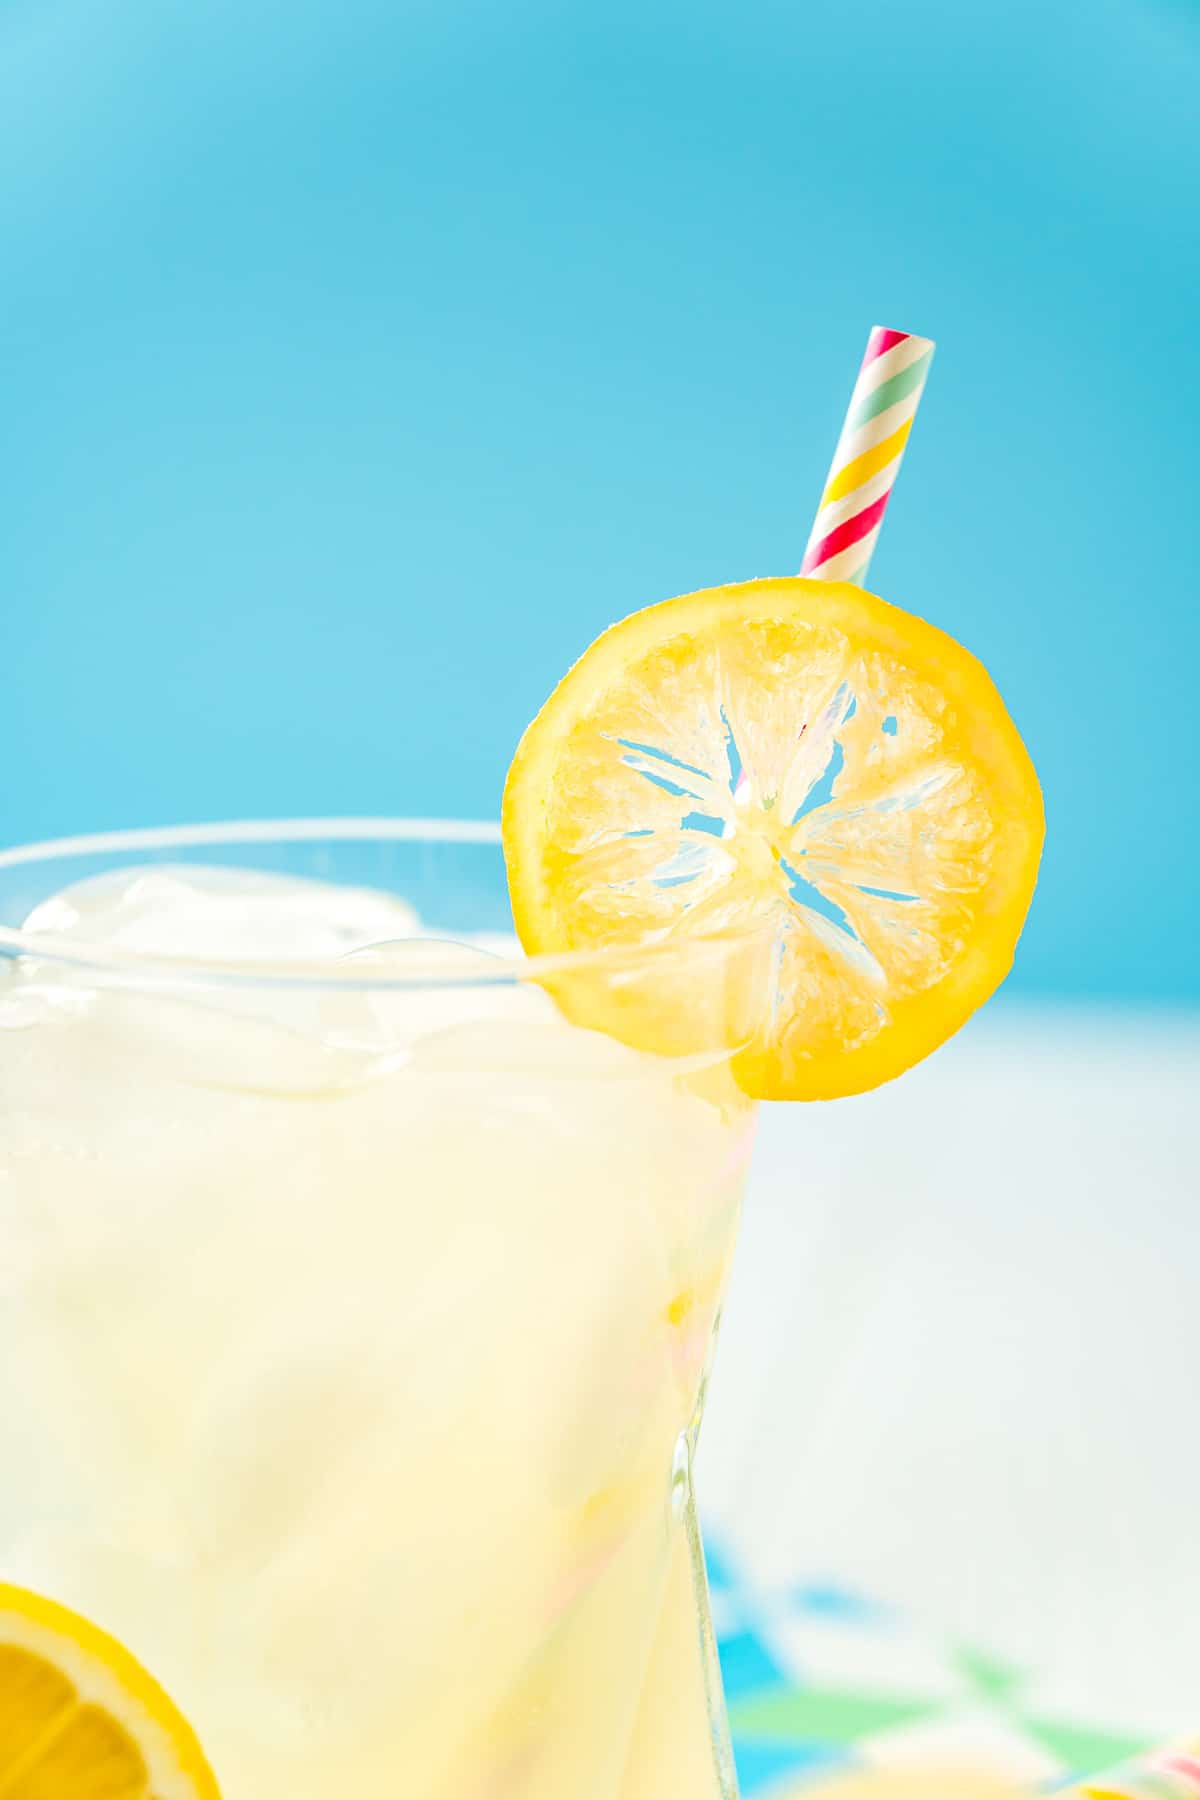 Candied Lemon slice on a glass of lemonade as a garnish.